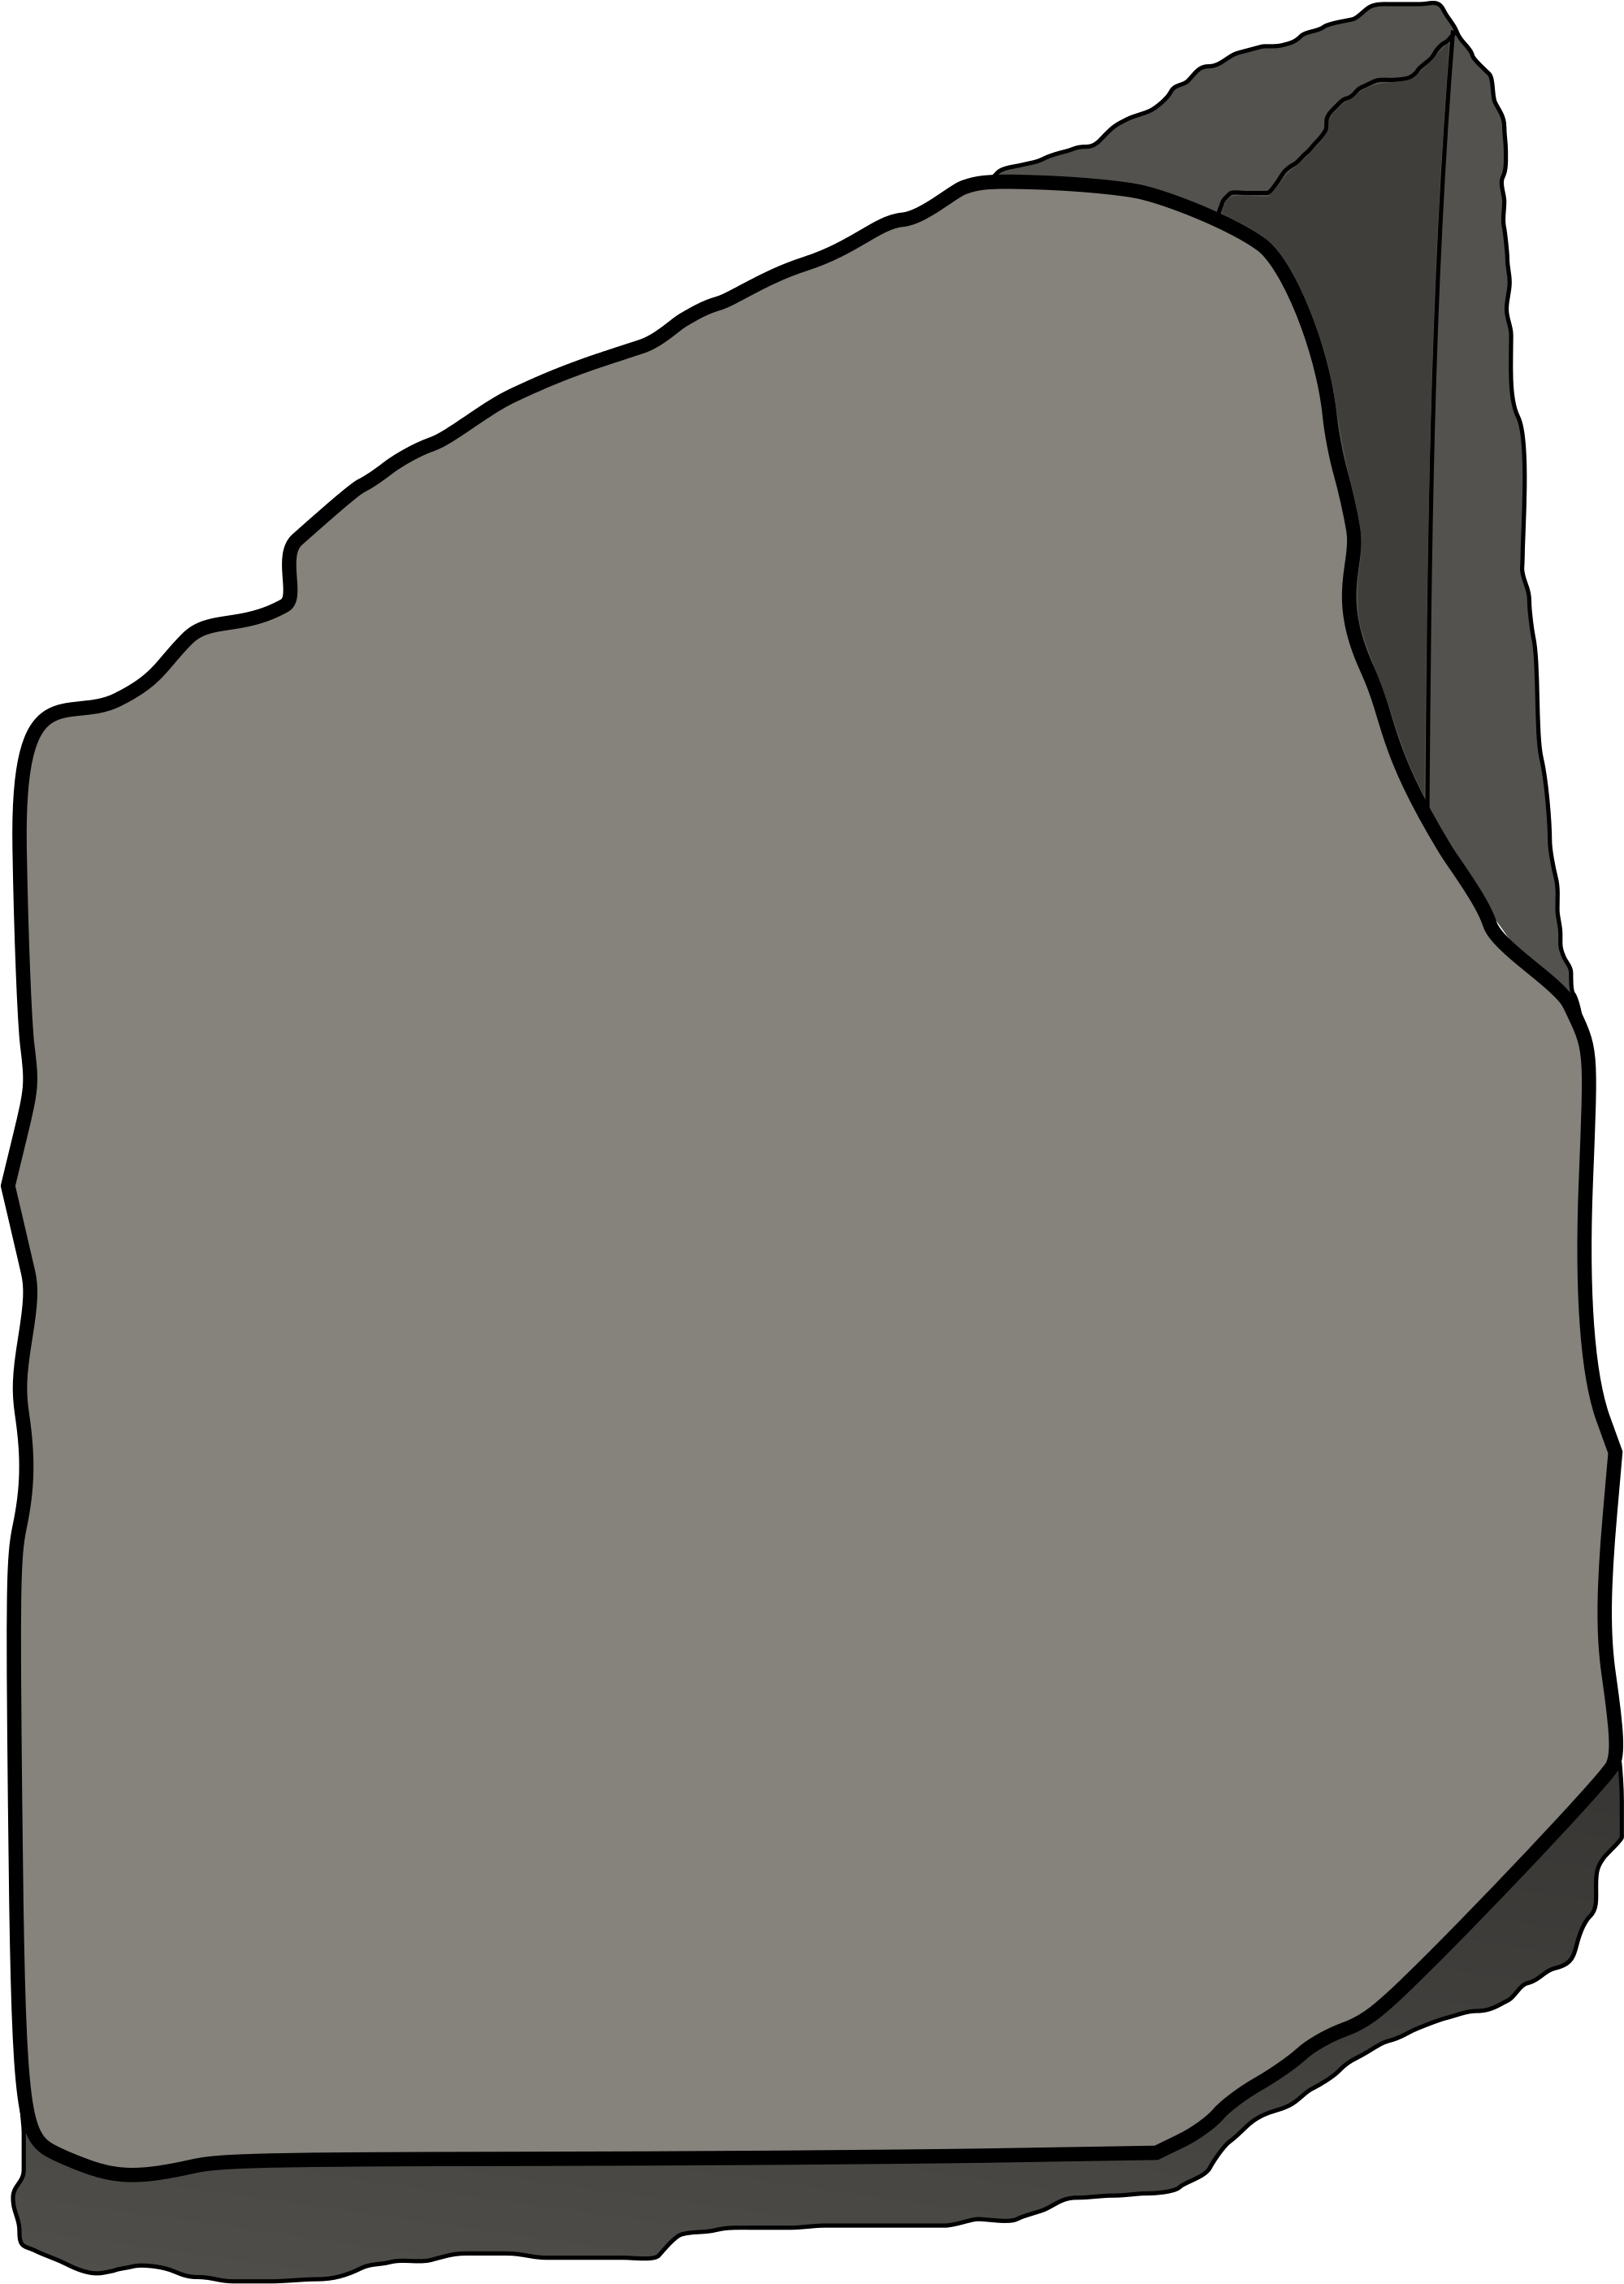 Open - Shape Of The Rosetta Stone (2000x2829)